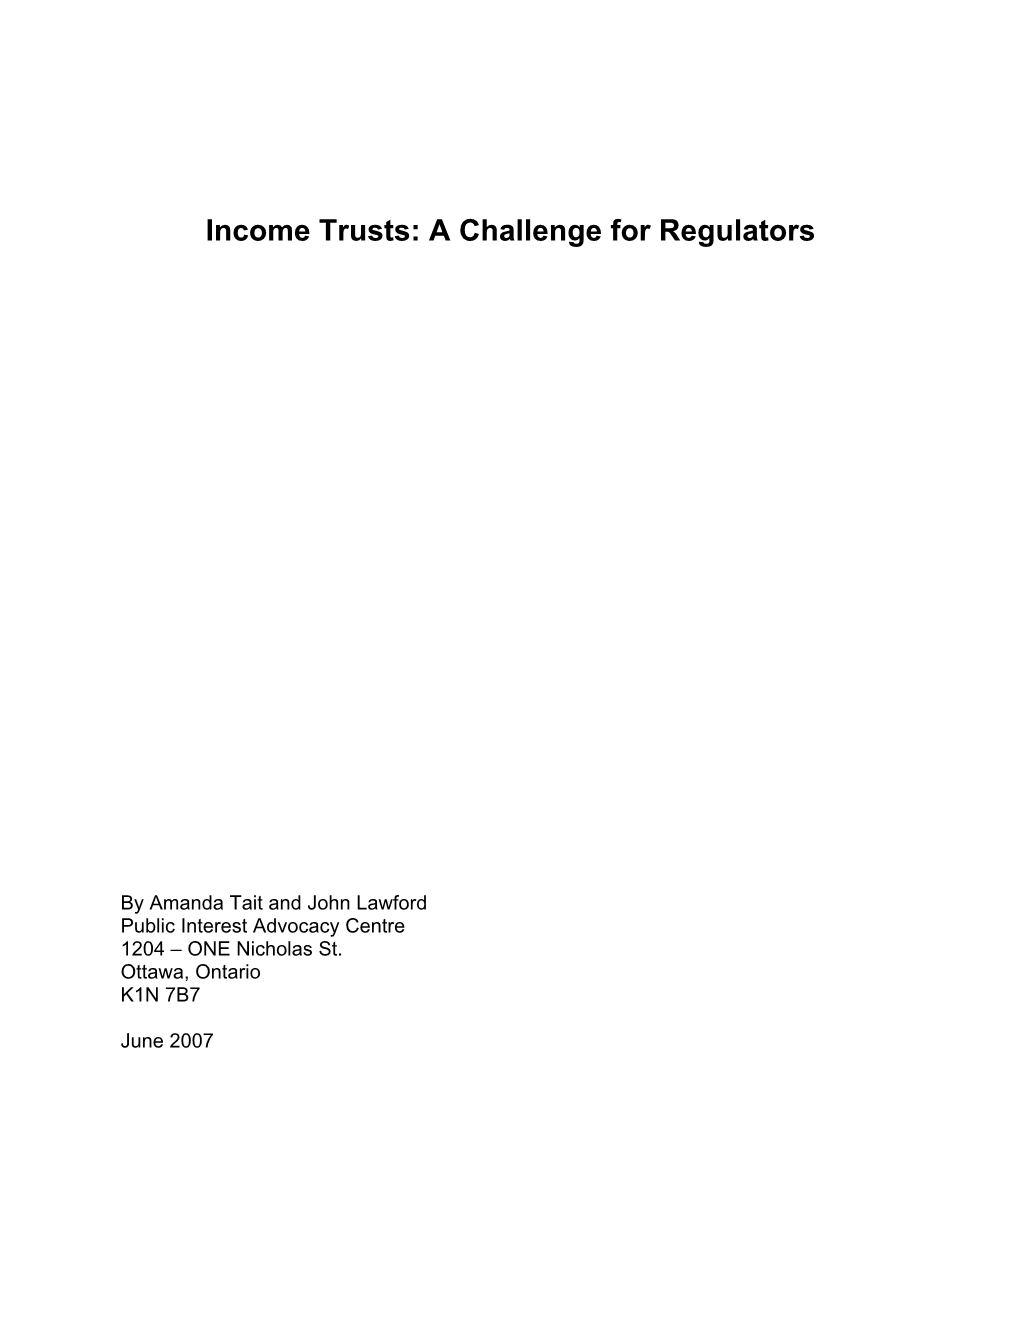 Income Trusts: a Challenge for Regulators